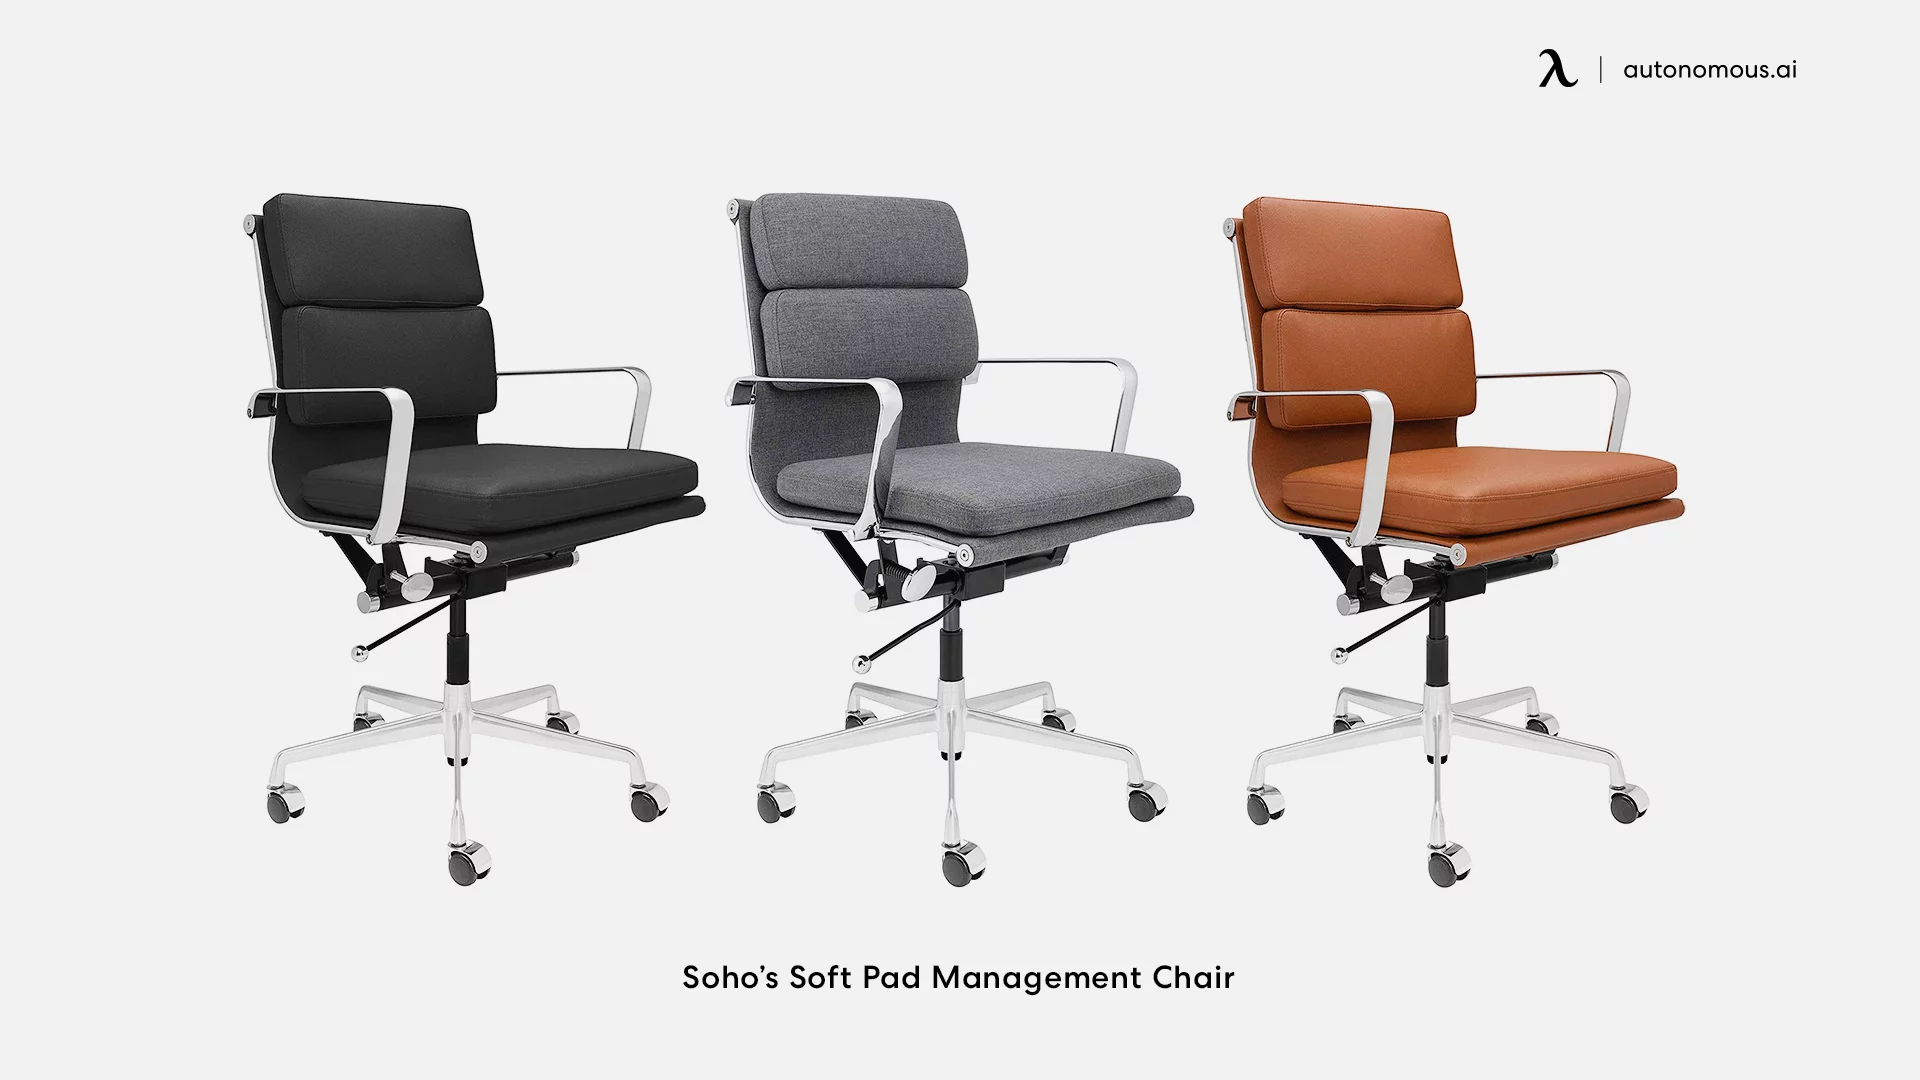 Soho’s Soft Pad Management Chair